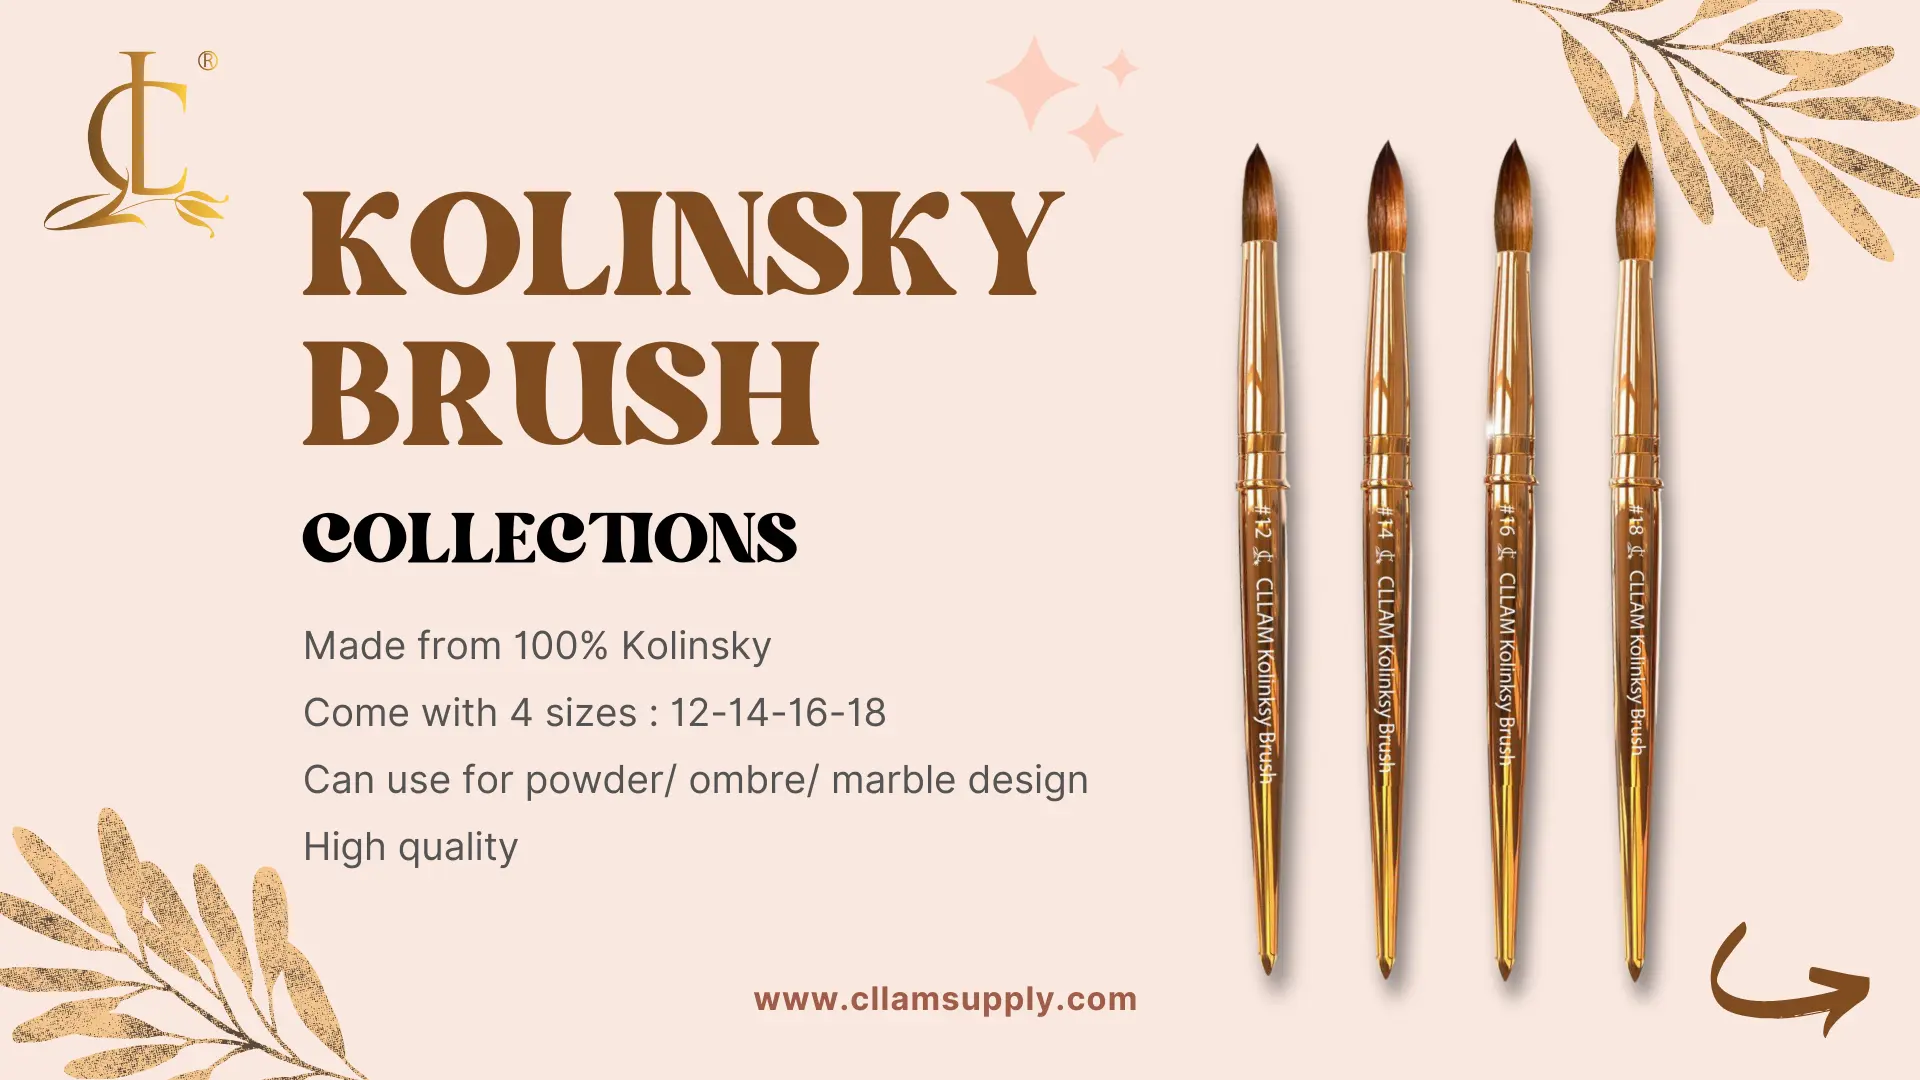 kolinsky brush web format